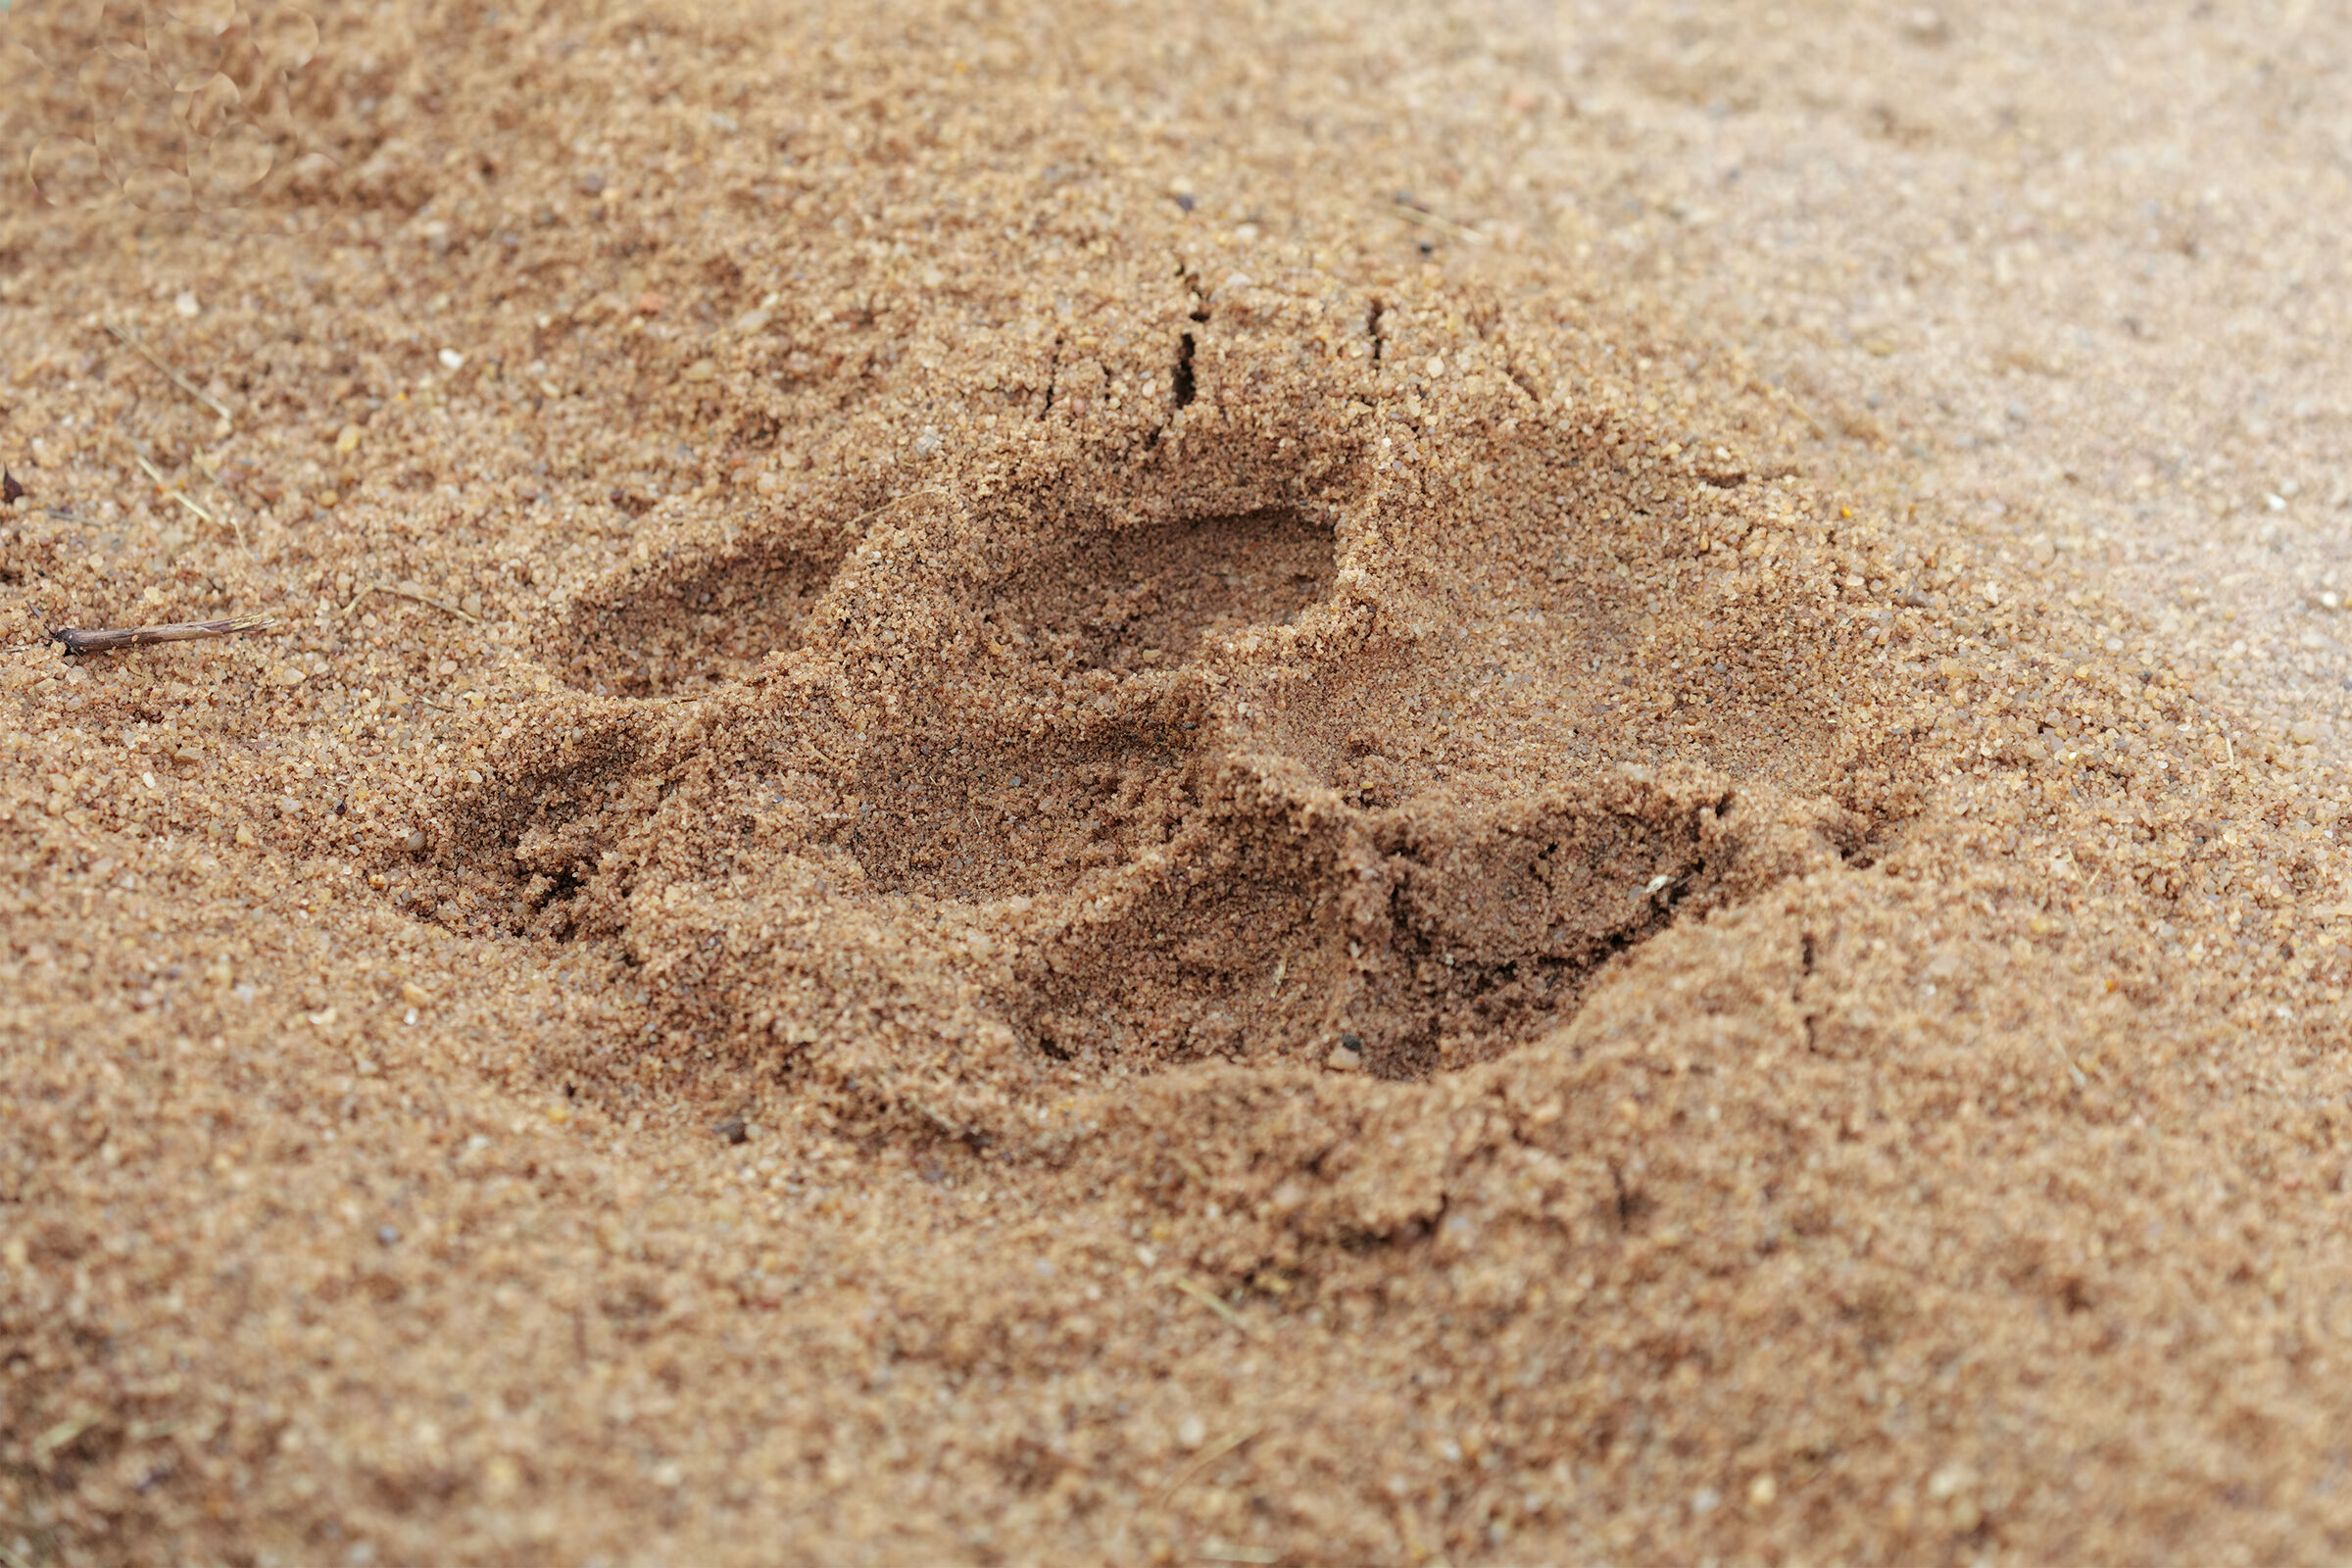 The footprint...